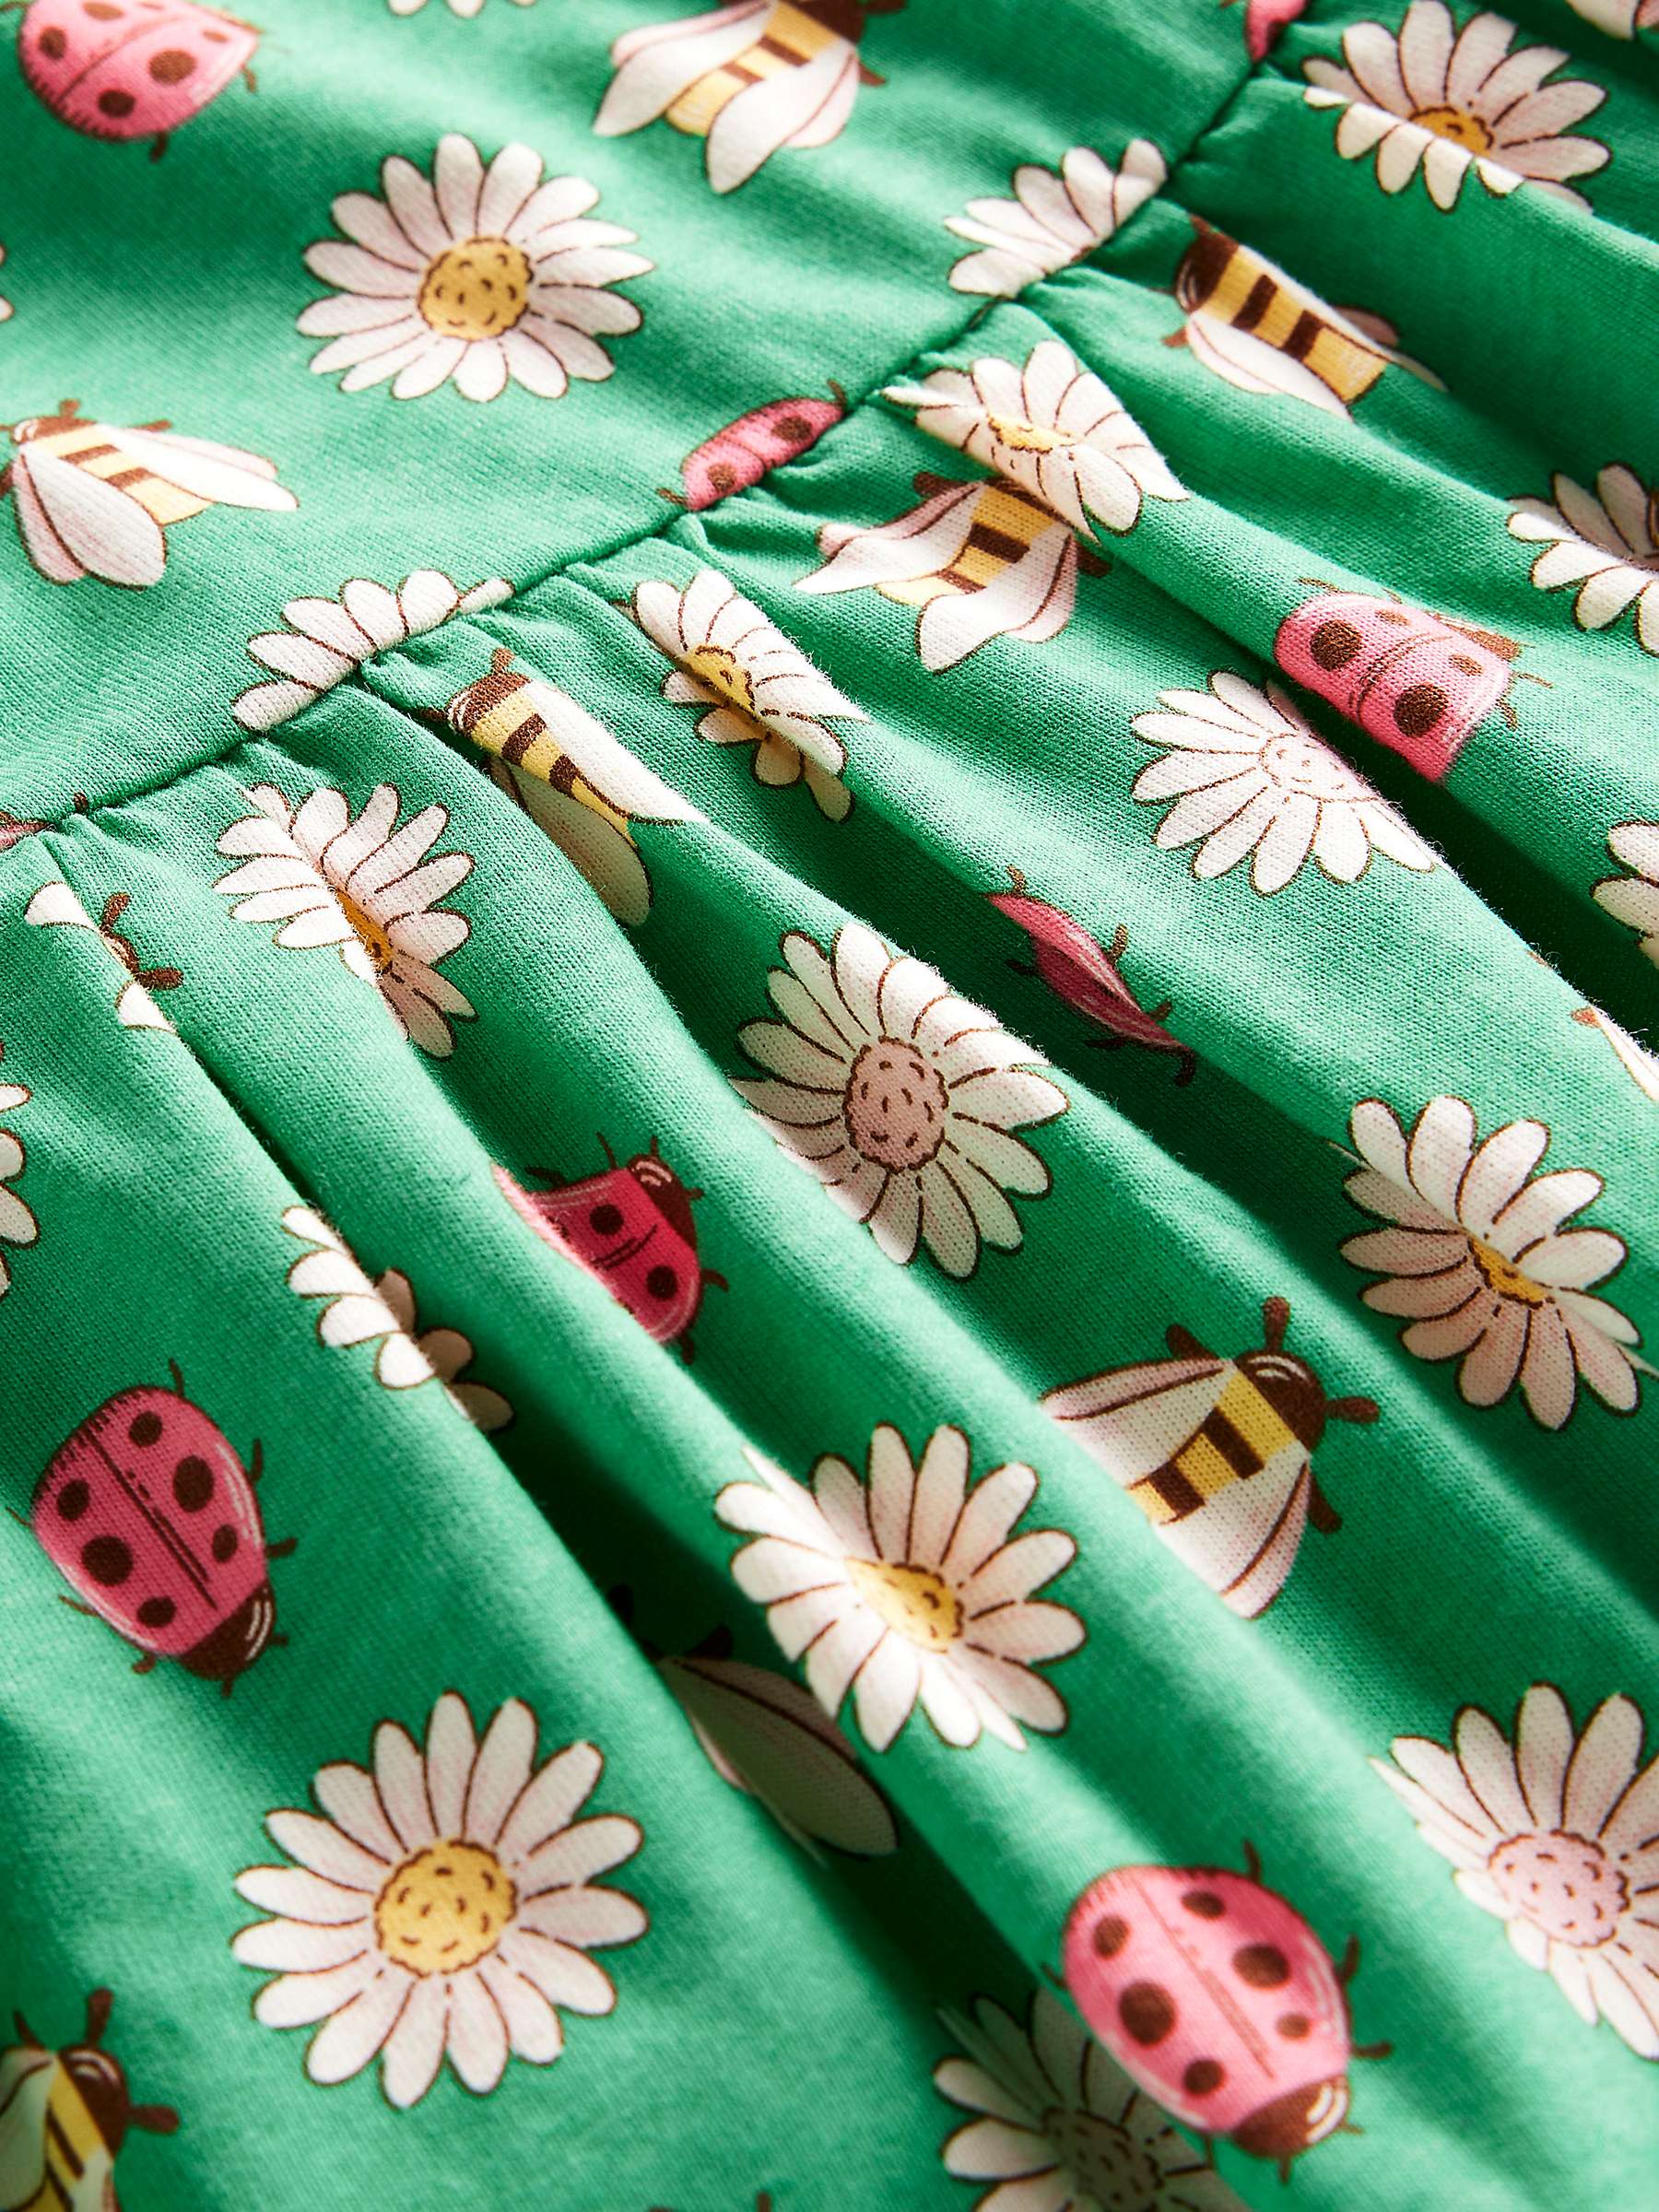 Buy Mini Boden Kids' Fun Daisy & Bugs Print Short Sleeved Jersey Dress, Pea Green Online at johnlewis.com